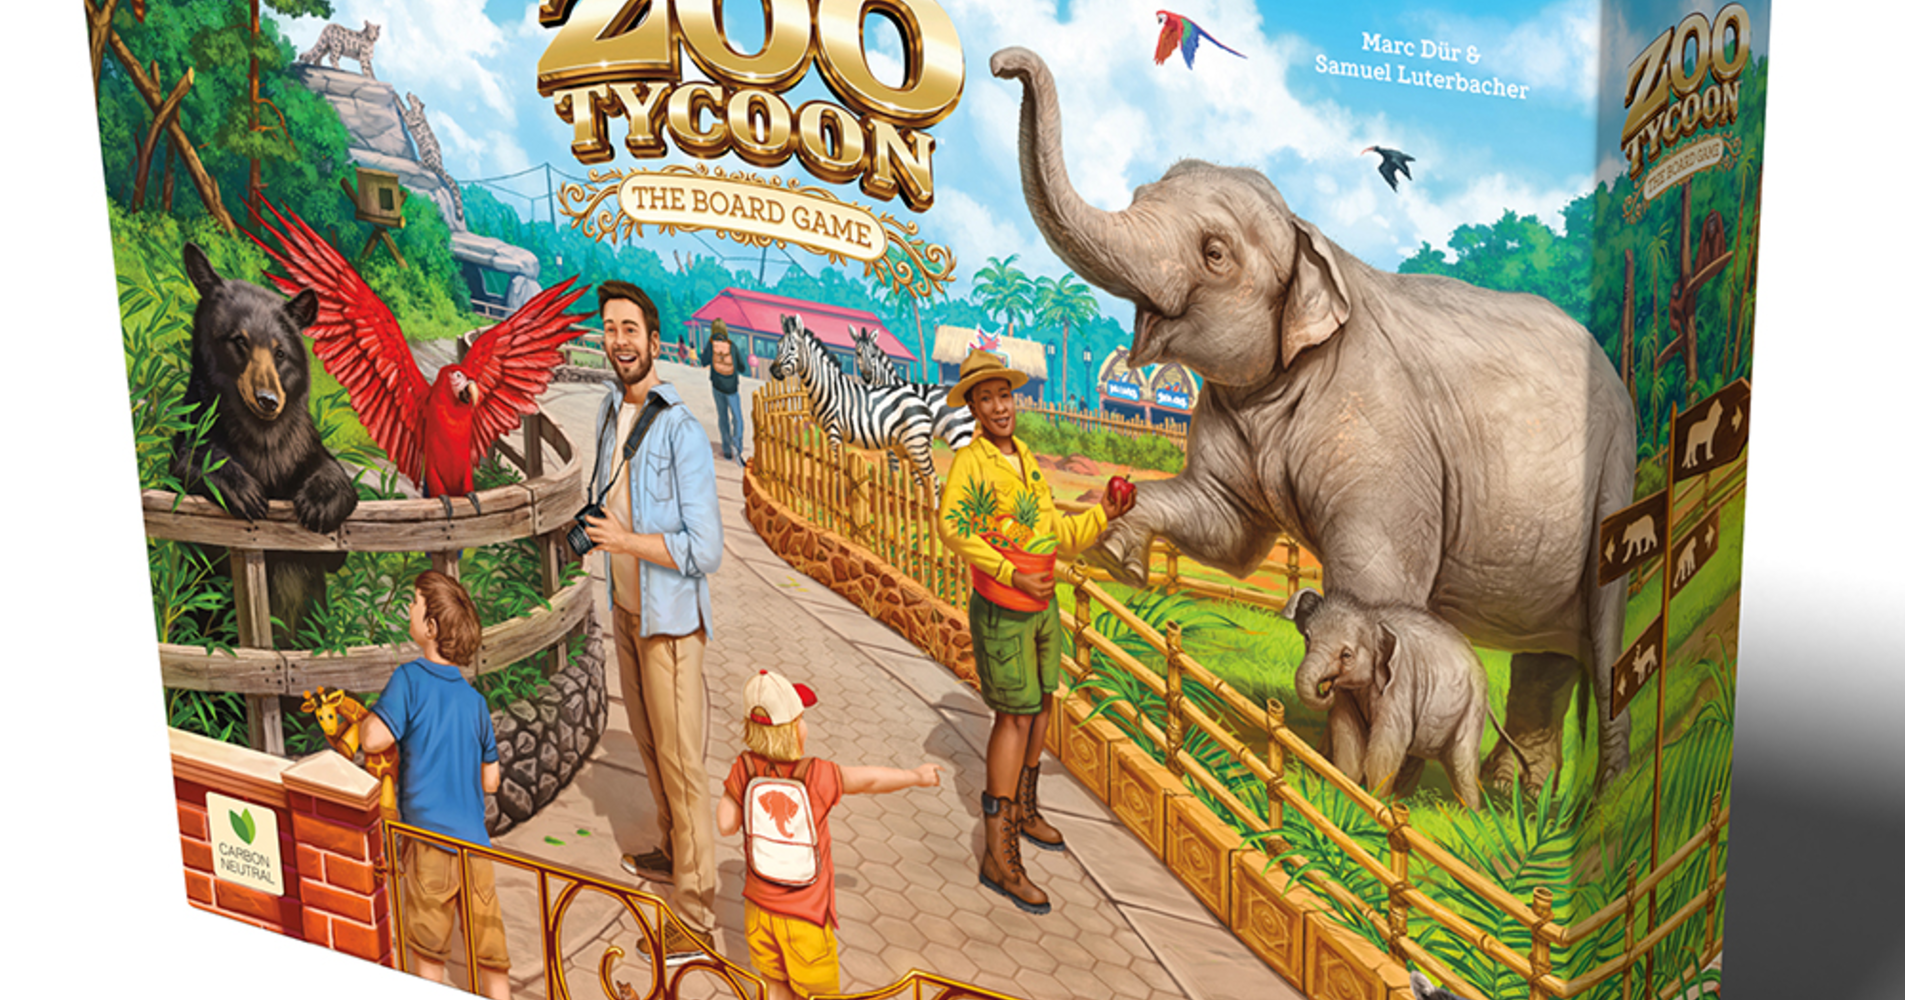 Zoo Tycoon Boardgame : r/ZooTycoon